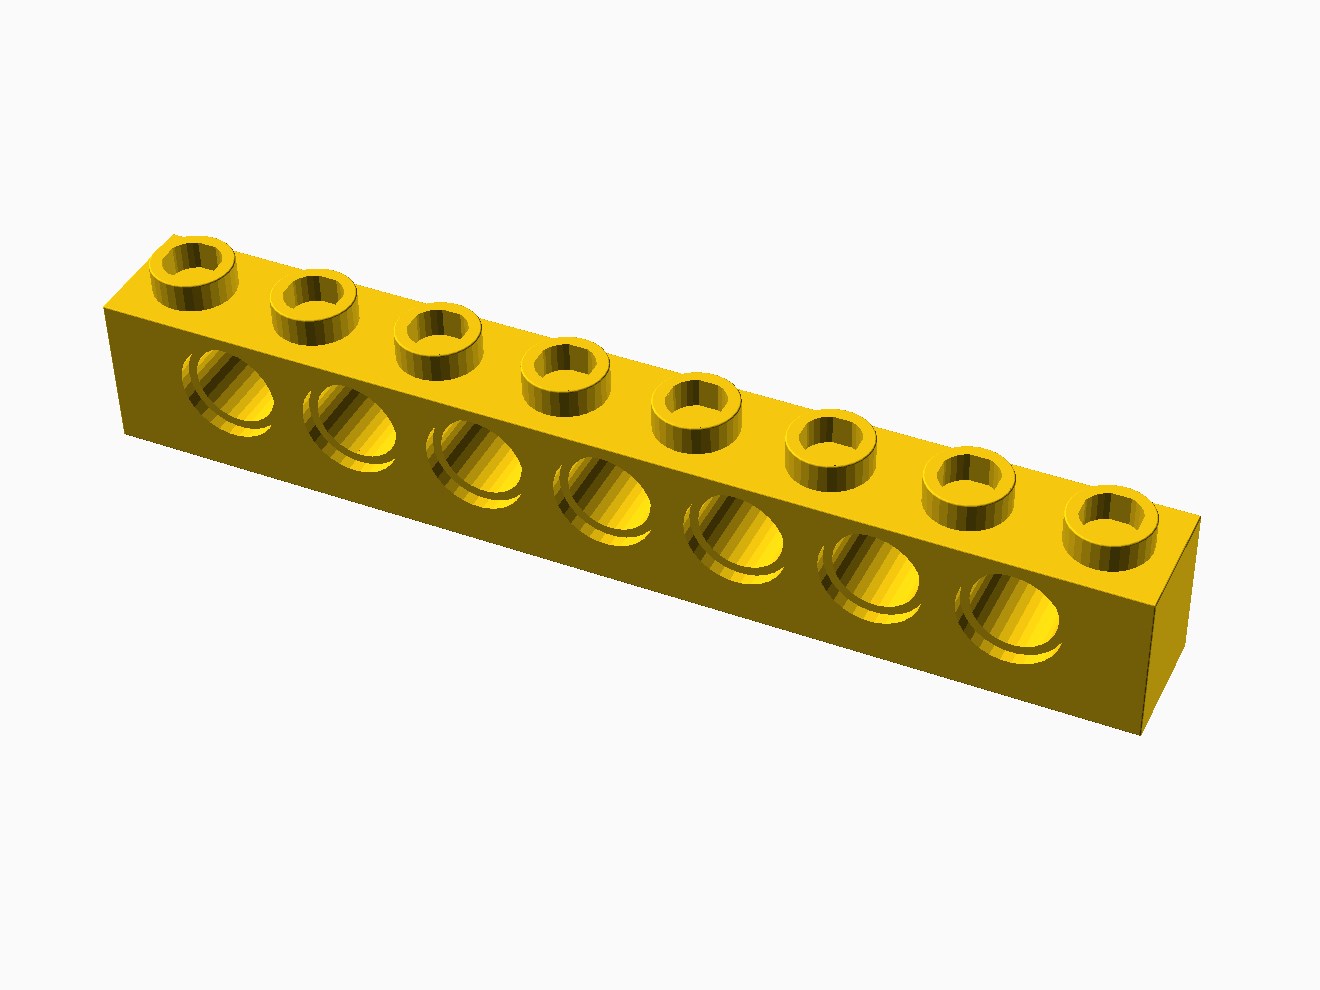 3D printable model of a LEGO Technic 8x1 Brick.